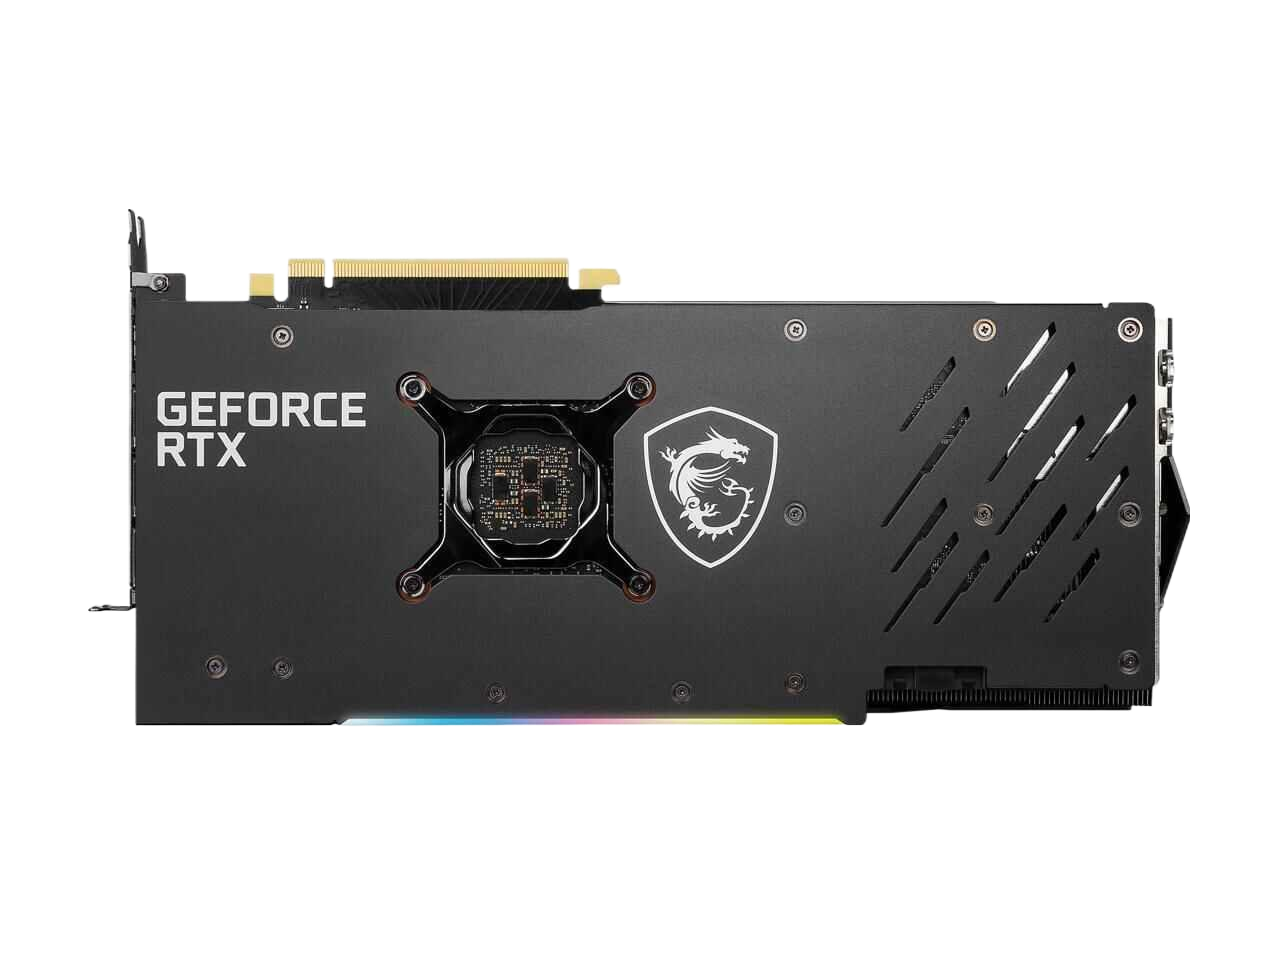 MSI GeForce RTX 3070 GAMING Z TRIO 8GB 256-bit GDDR6 PCI Express 4.0 LHR Graphics Card